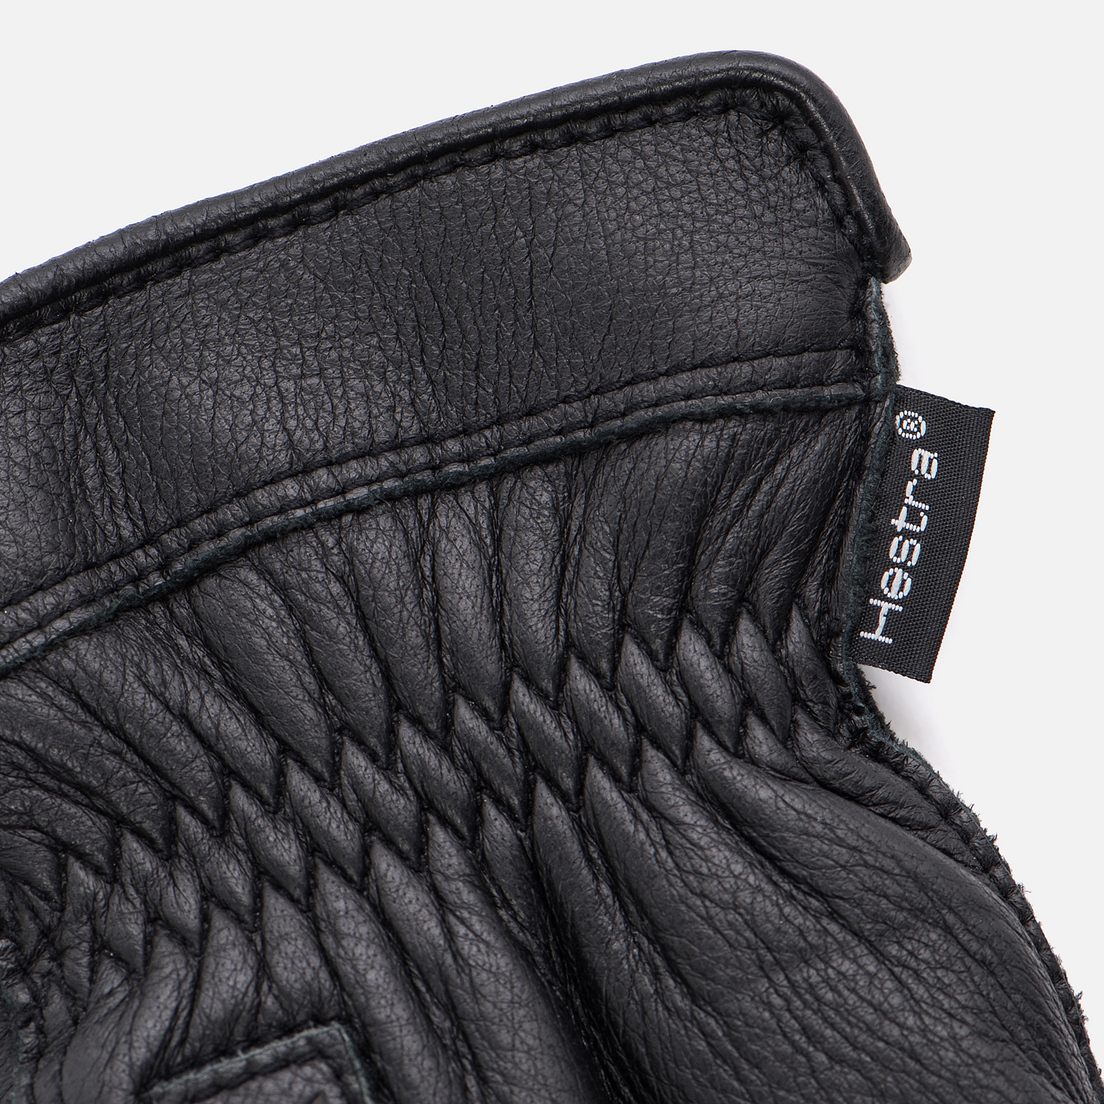 Hestra Мужские перчатки Vackert Leather